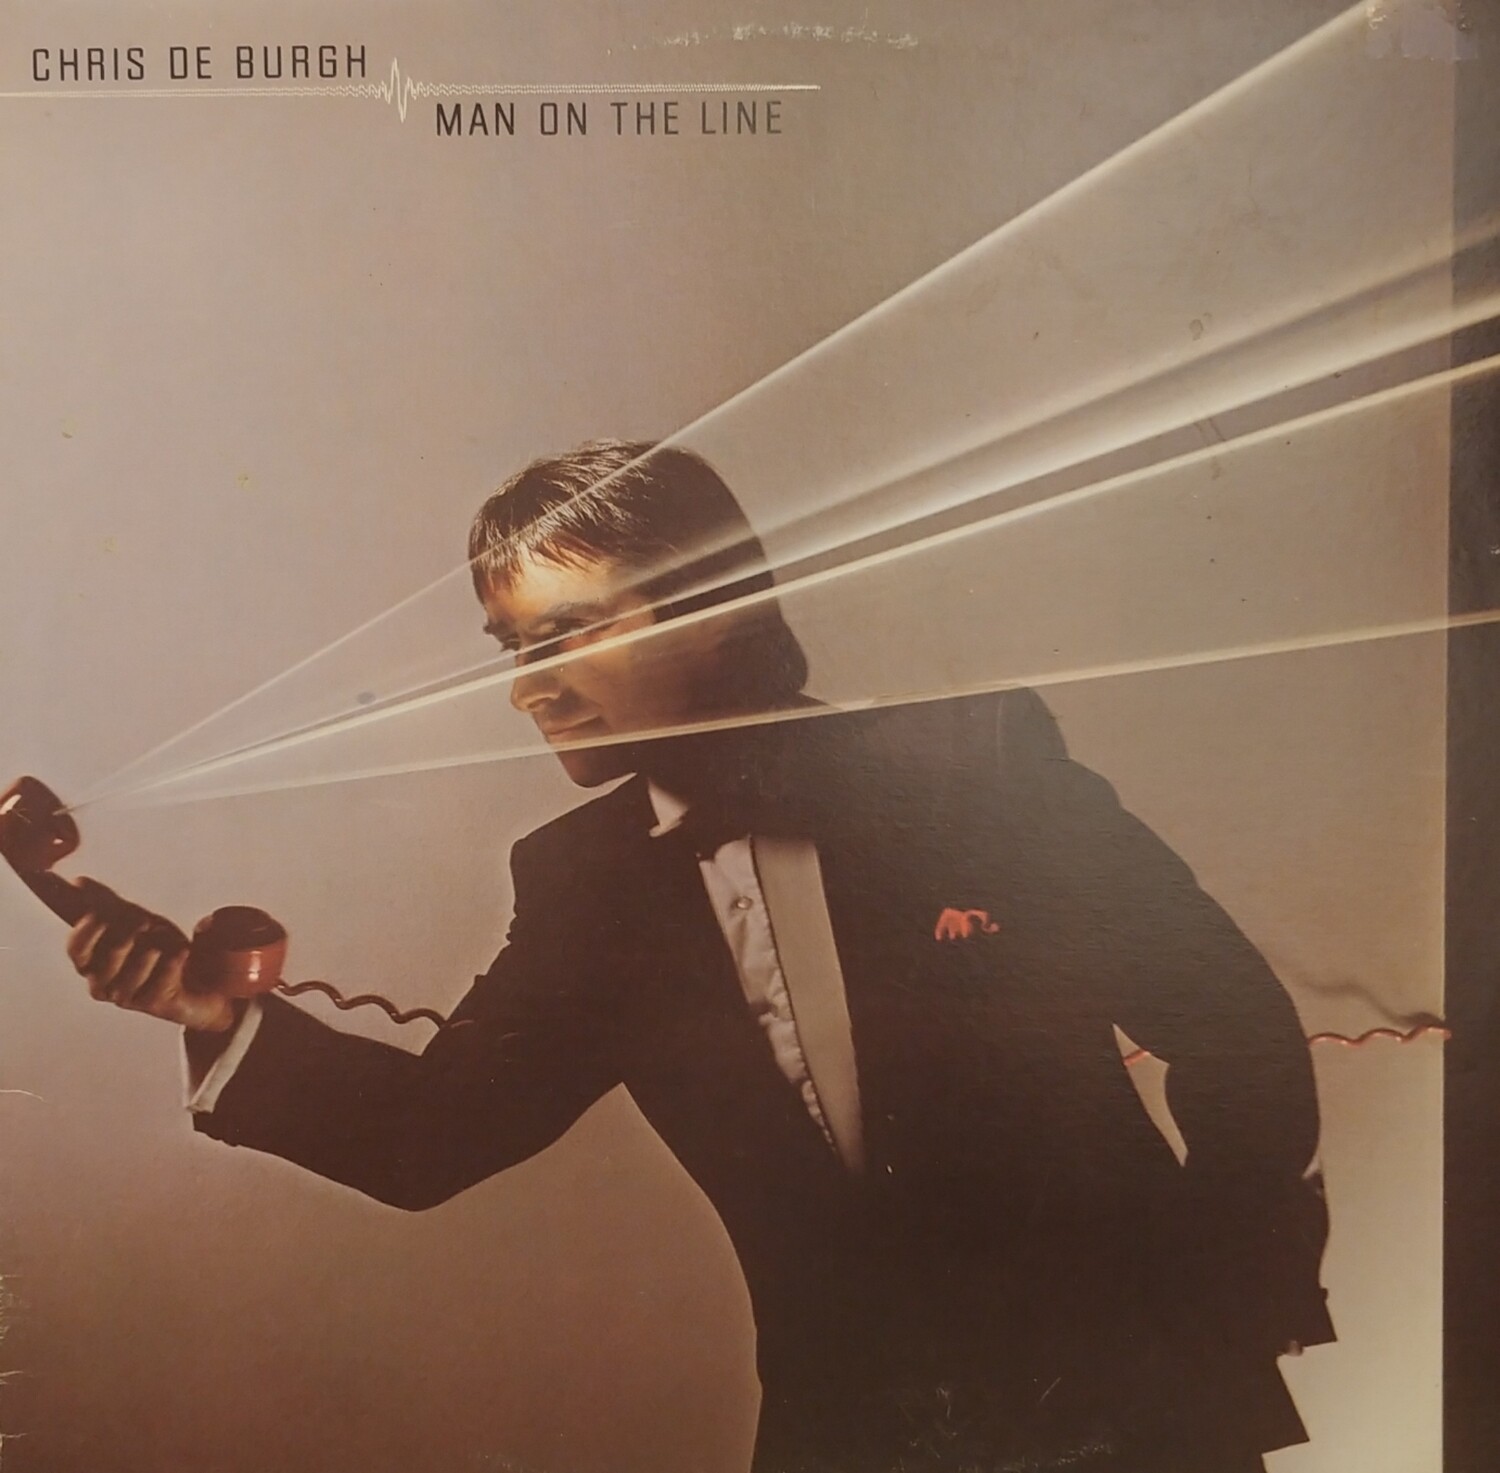 Chris De Burgh - Man on the line